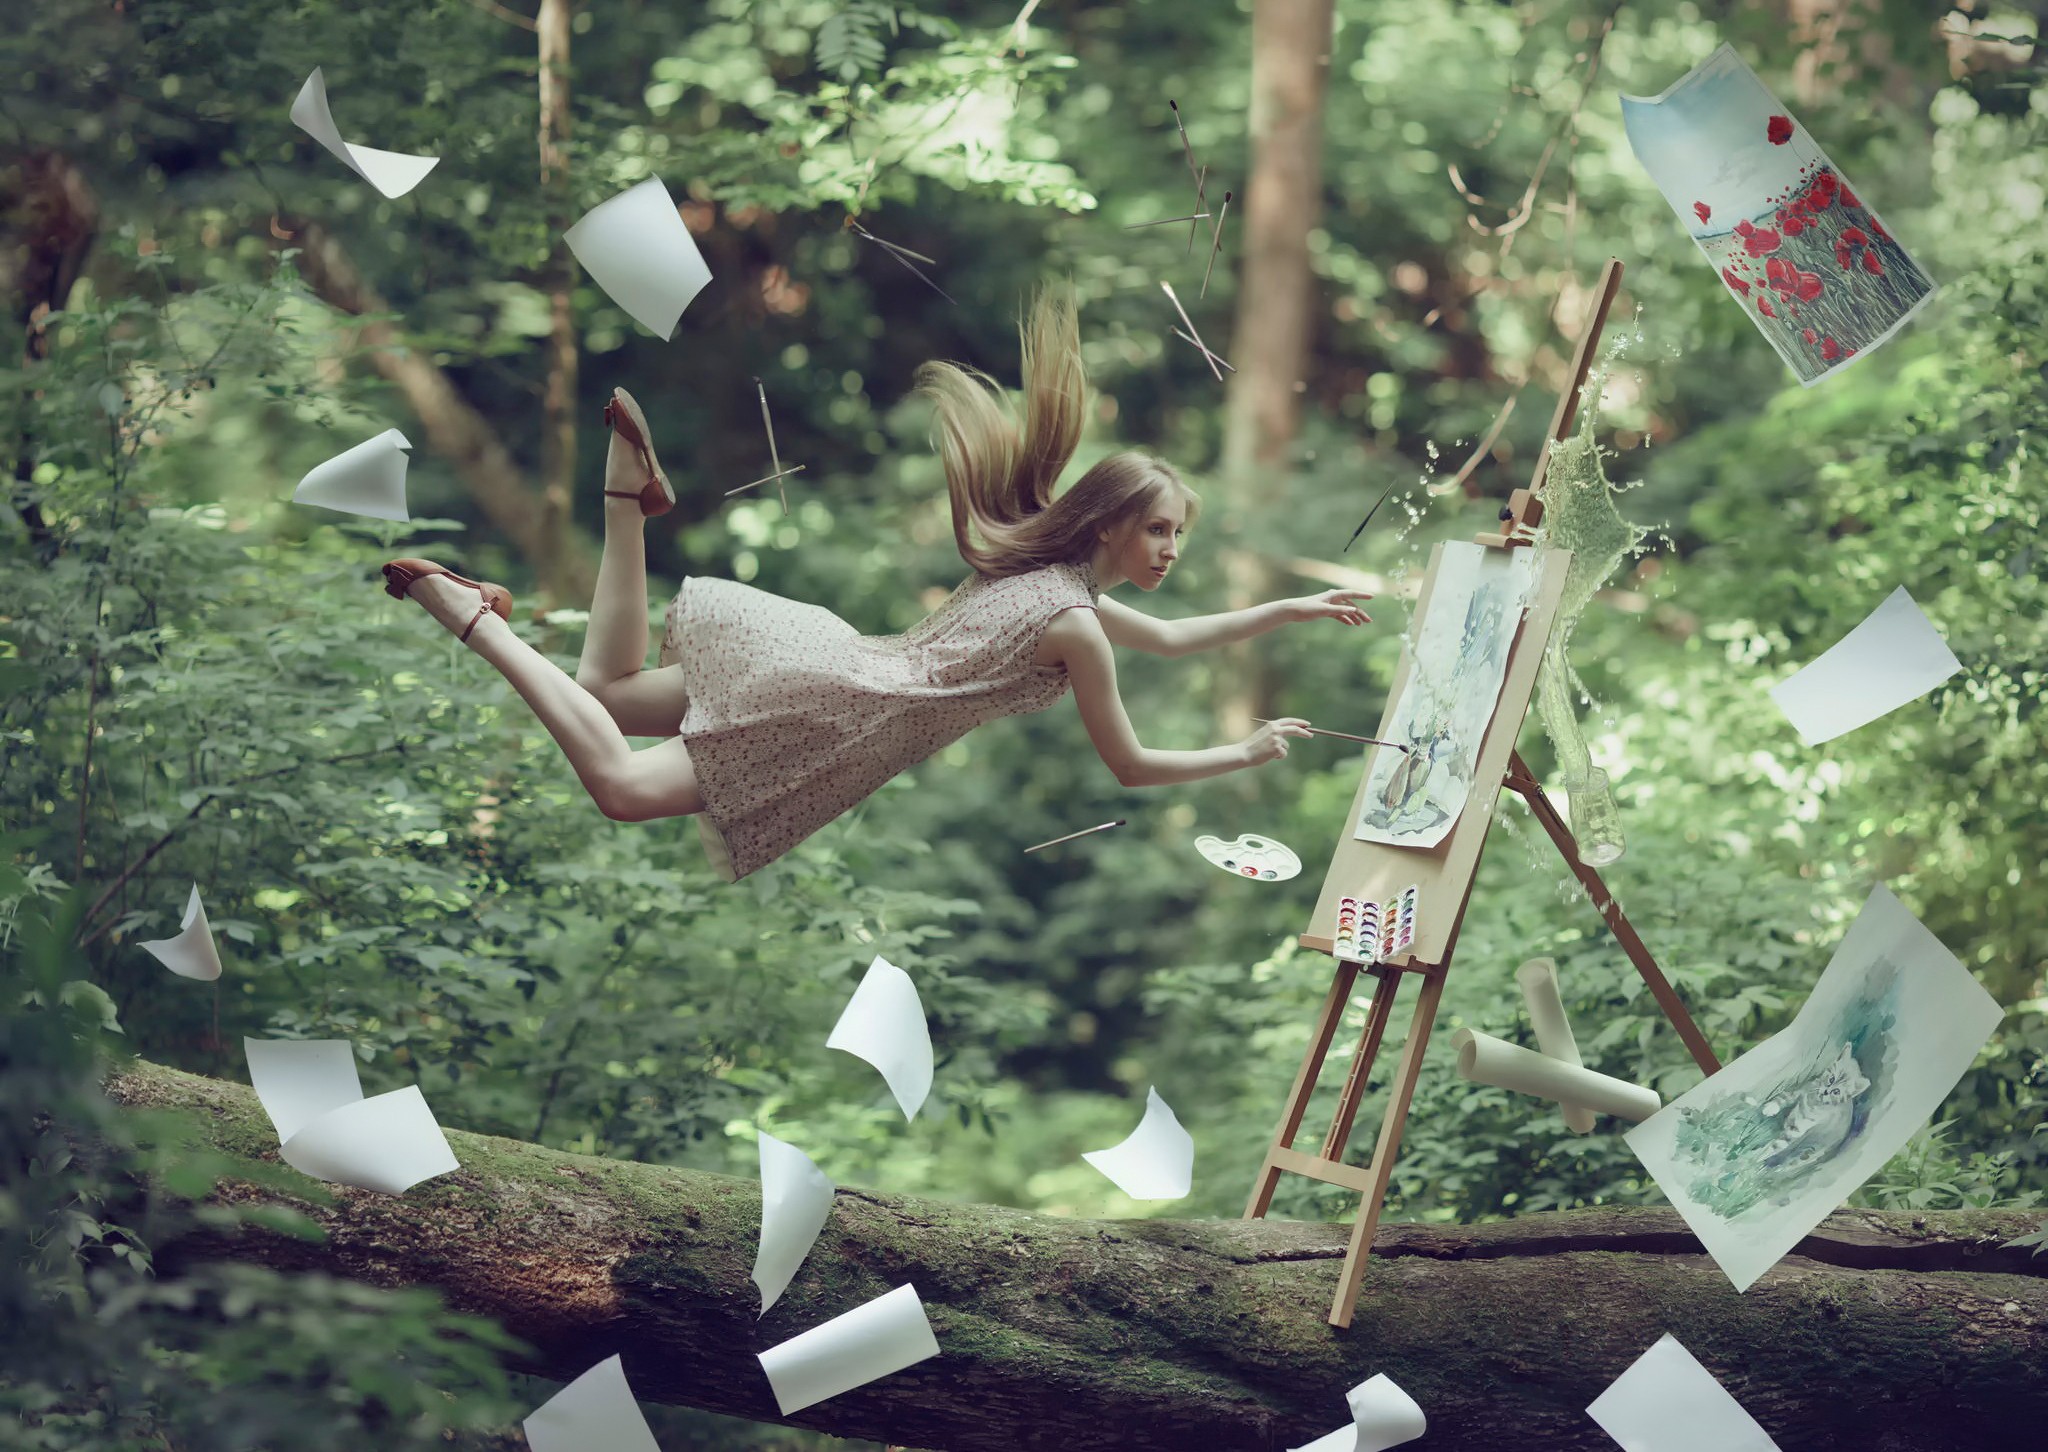 People 2048x1452 fantasy art women model easel painting paper floating windy blonde tree trunk plants trees digital art